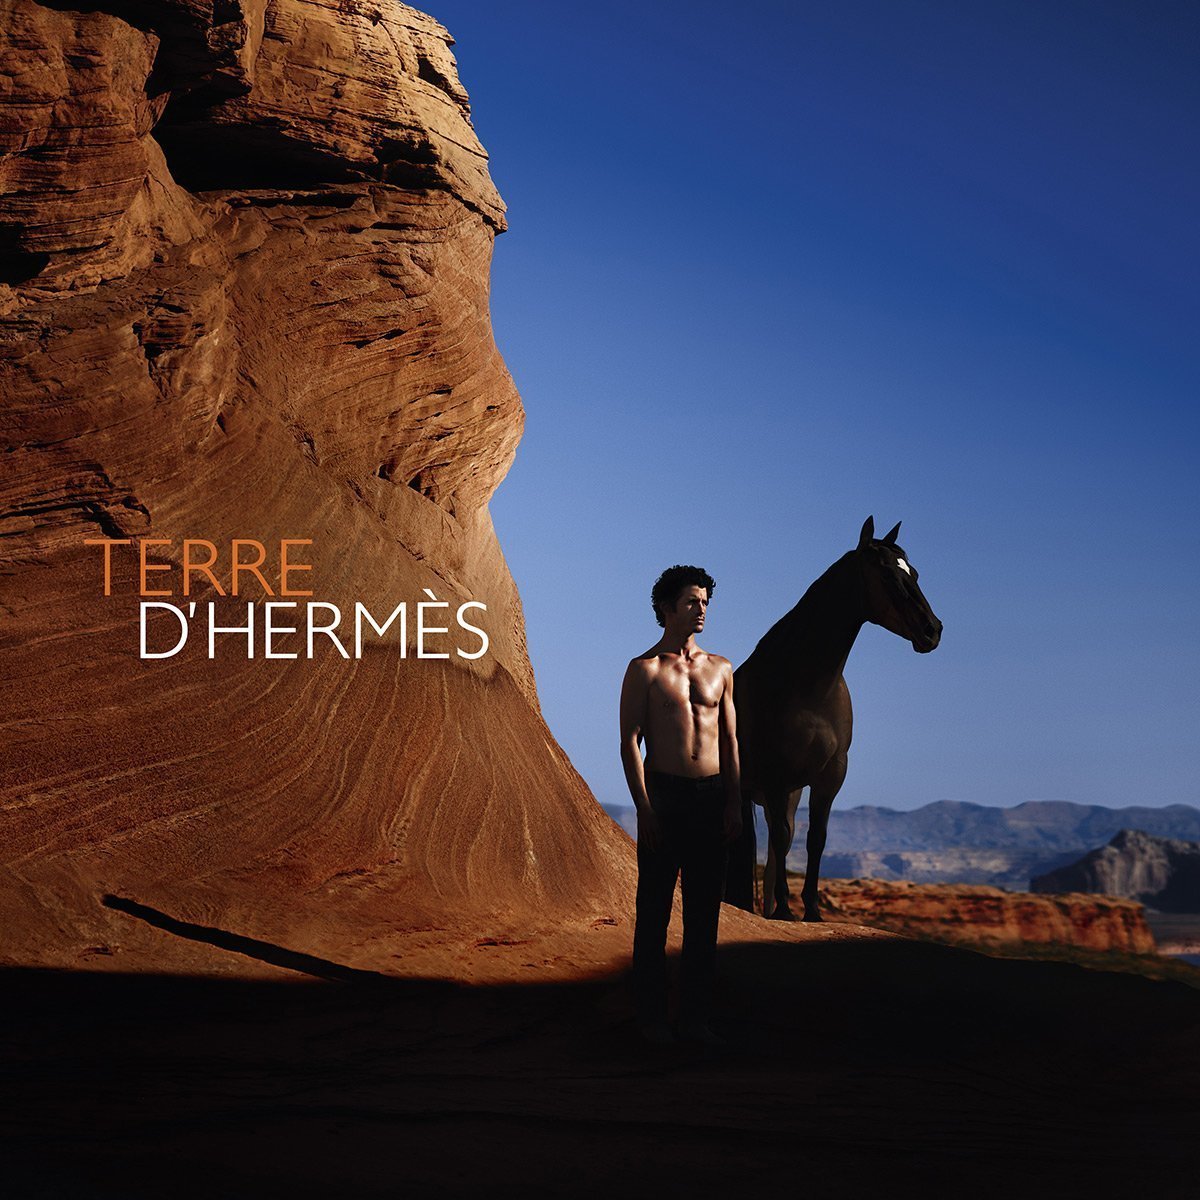 HERMÈS Terre d'Hermes Shaving Foam - My Perfume Shop Australia